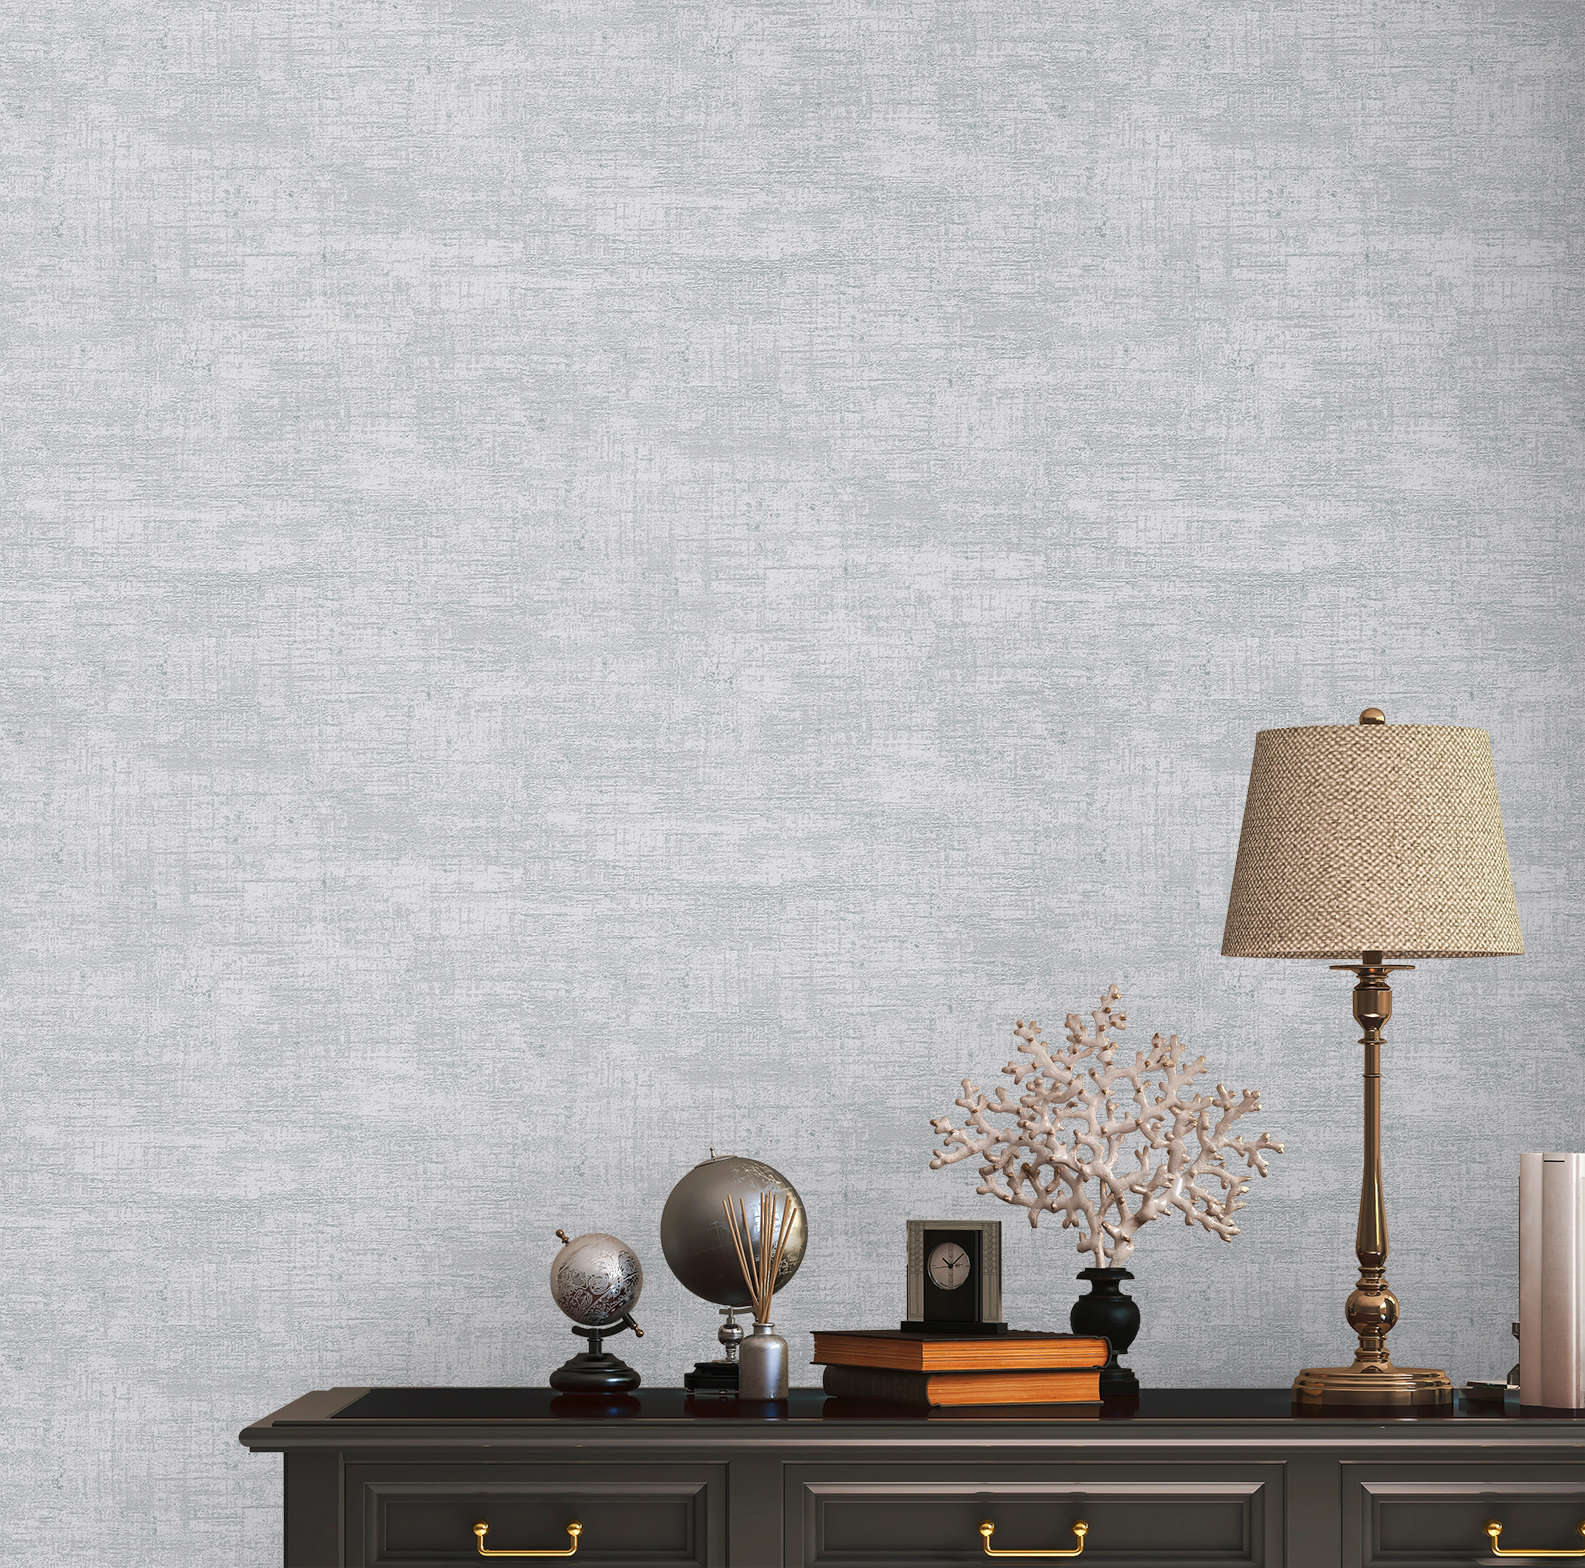             Non-woven wallpaper with metallic accents - grey, silver
        